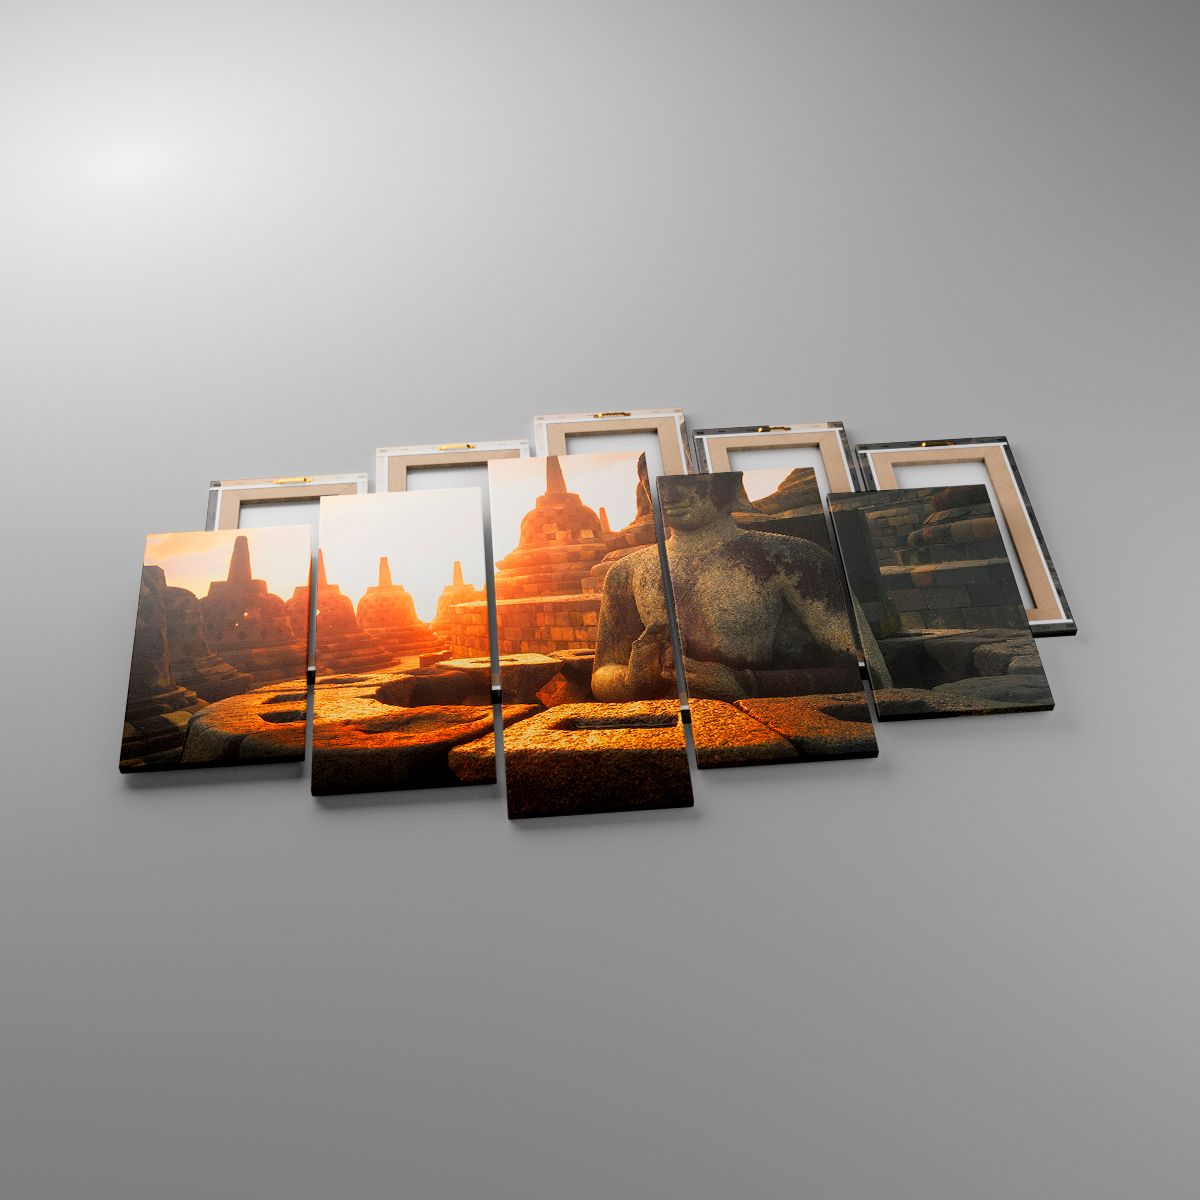 Leinwandbild Asien, Leinwandbild Buddha, Leinwandbild Borobudur, Leinwandbild Kultur, Leinwandbild Meditation